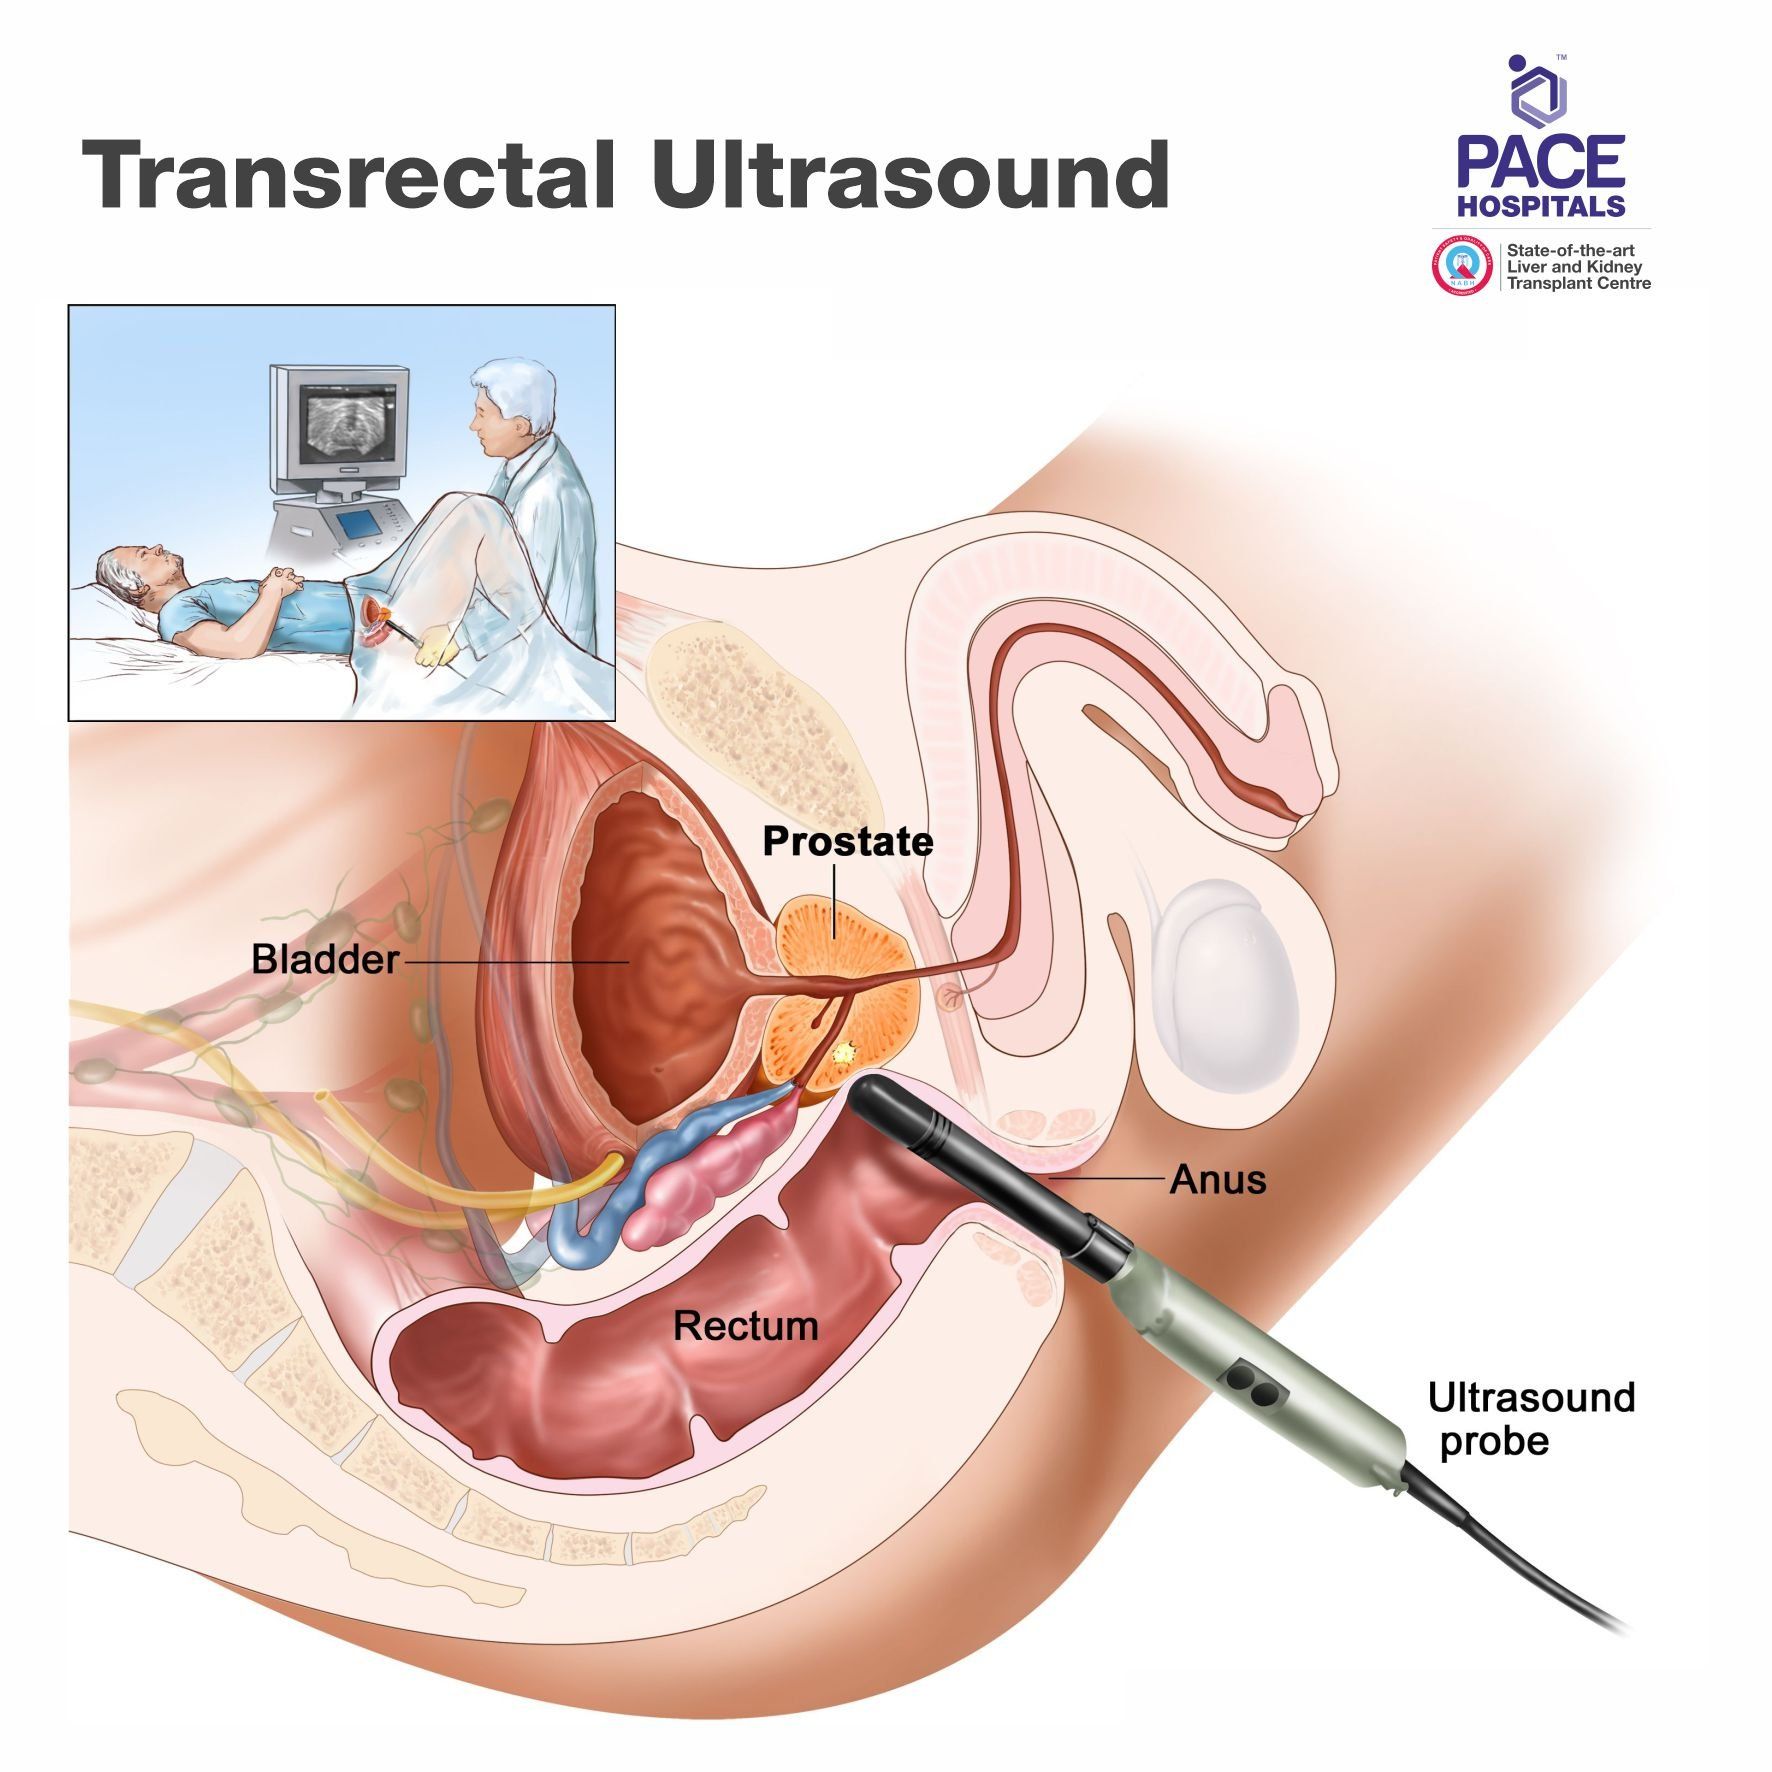 Transrectal ultrasound - Diagnosis of Prostate Cancer